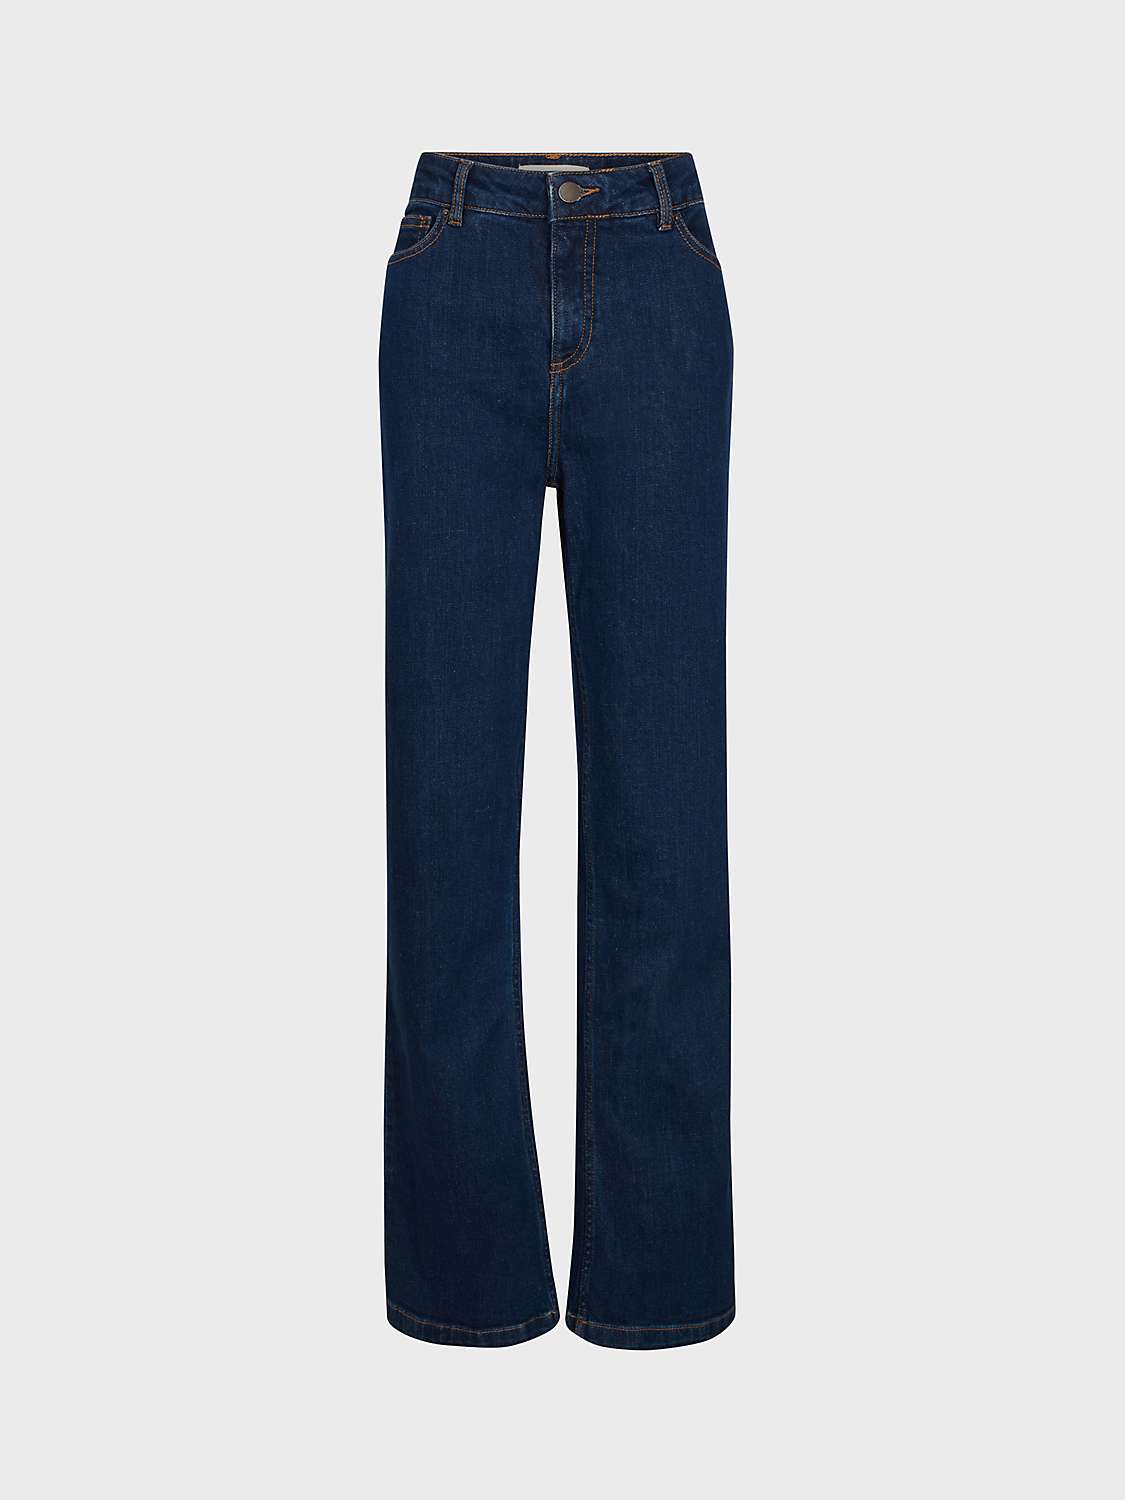 Buy Gerard Darel Elyor Jeans, Blue Online at johnlewis.com